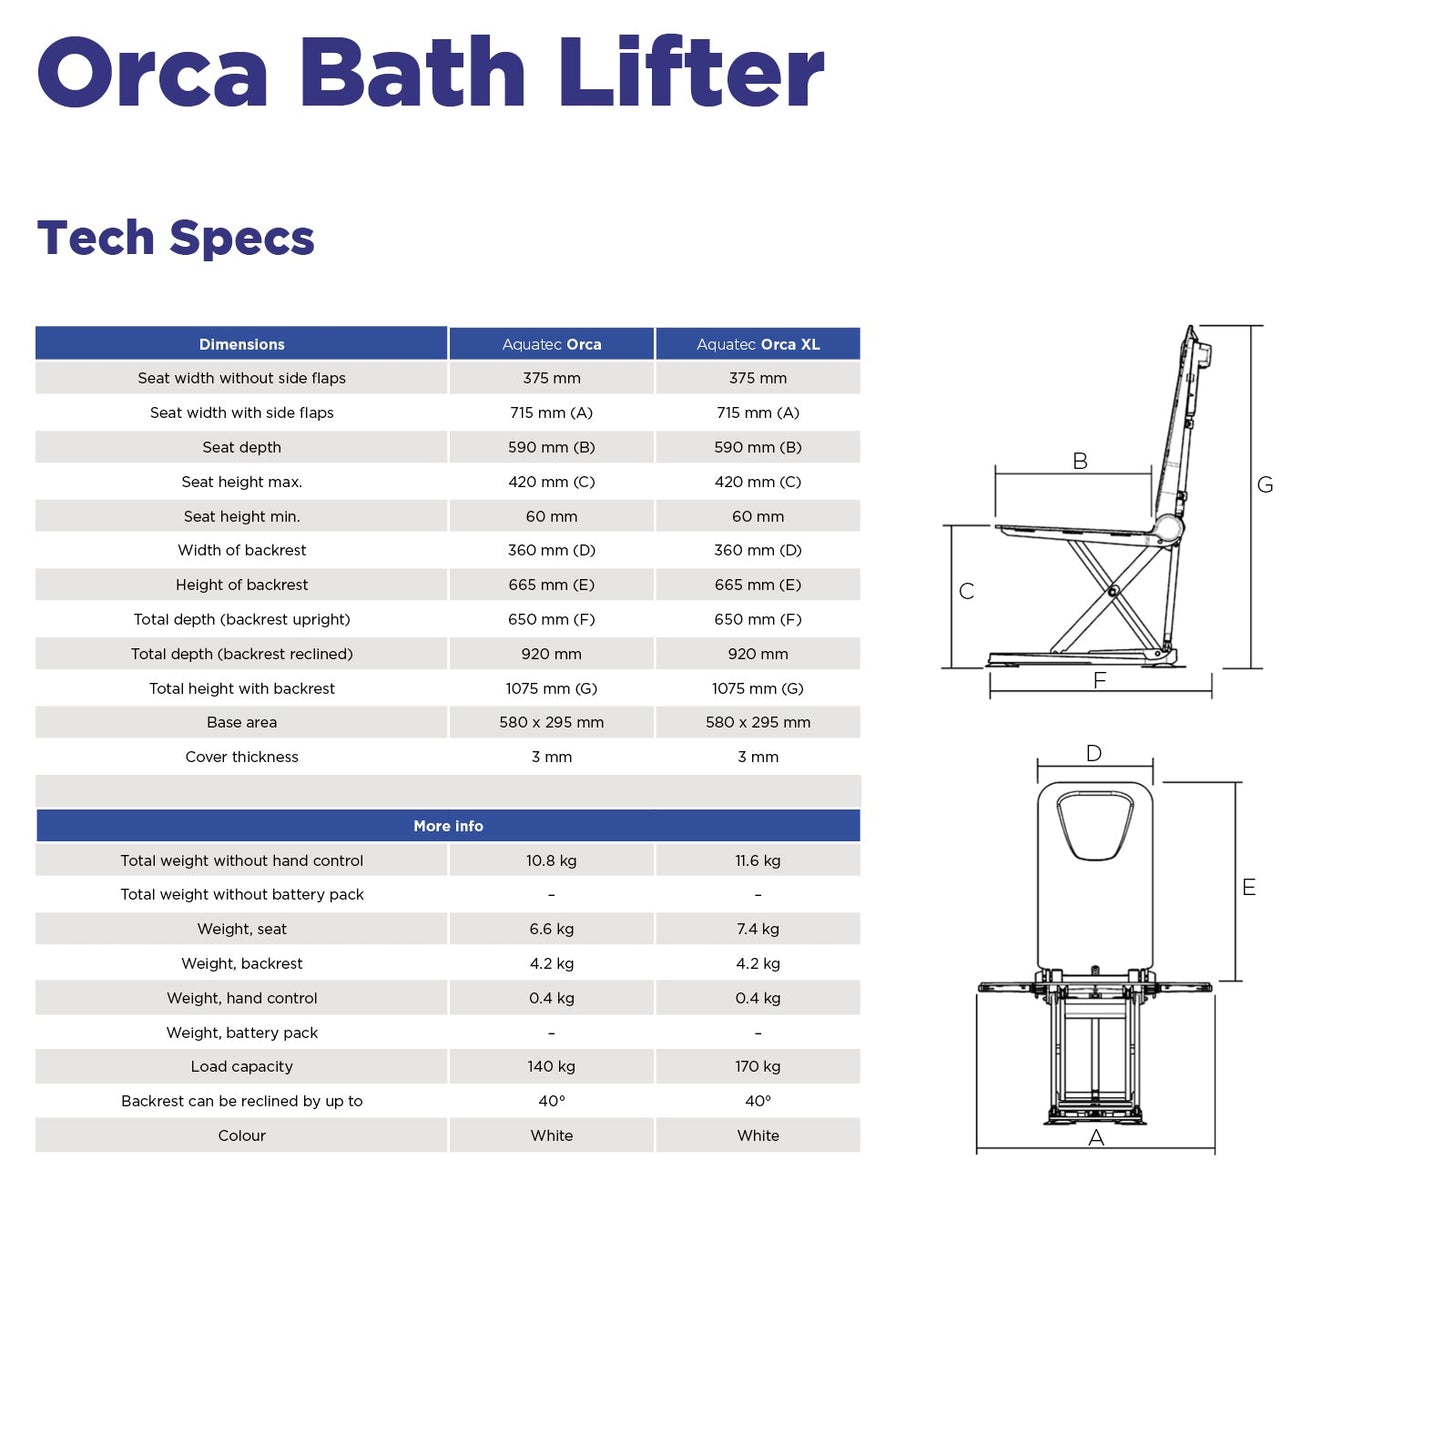 Ocra Bath Lifter